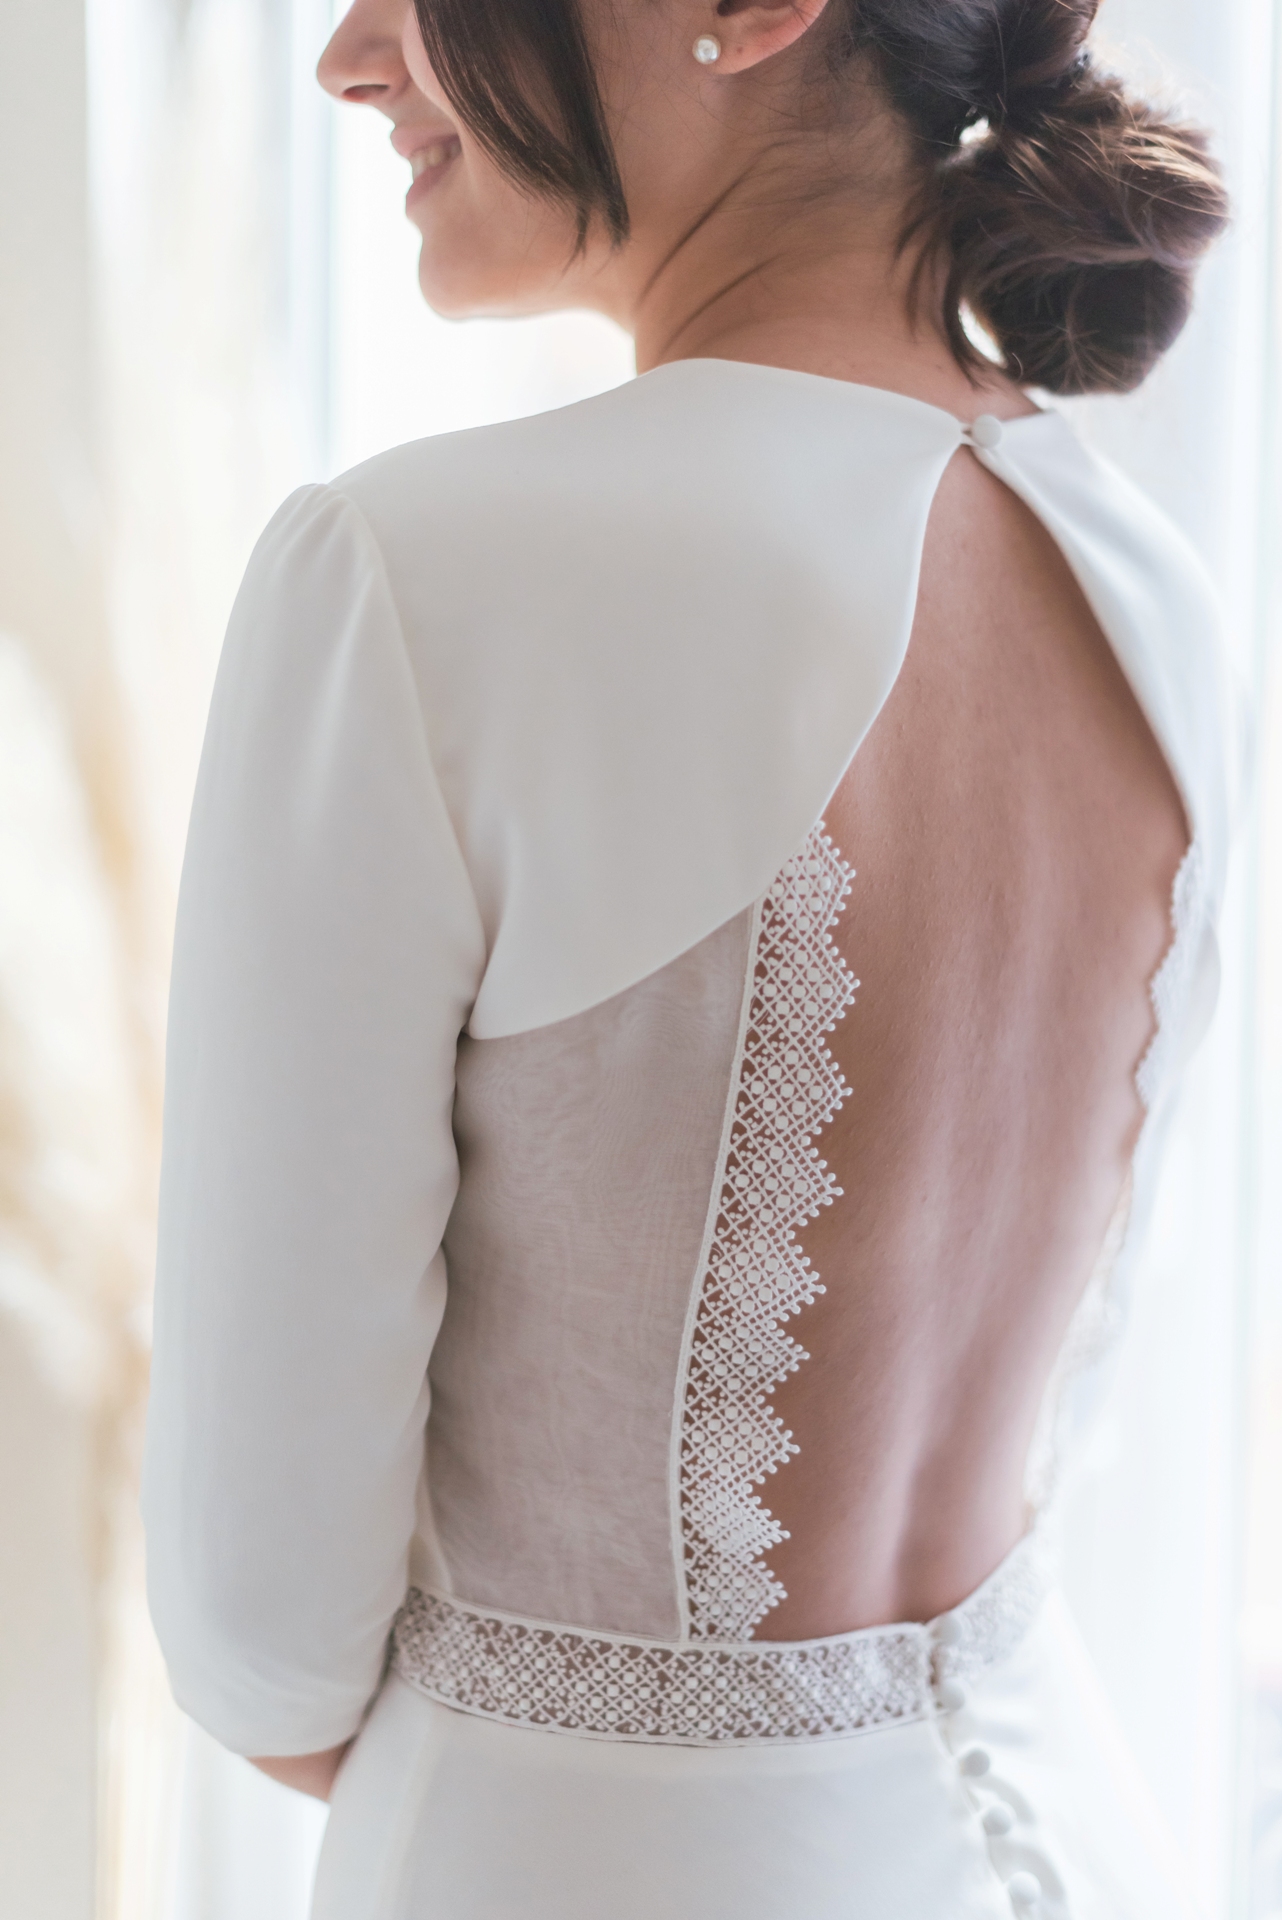 Robe de mariée fluide au lignes simples, crêpe de soie, dos nu - Drina - Maison Avina